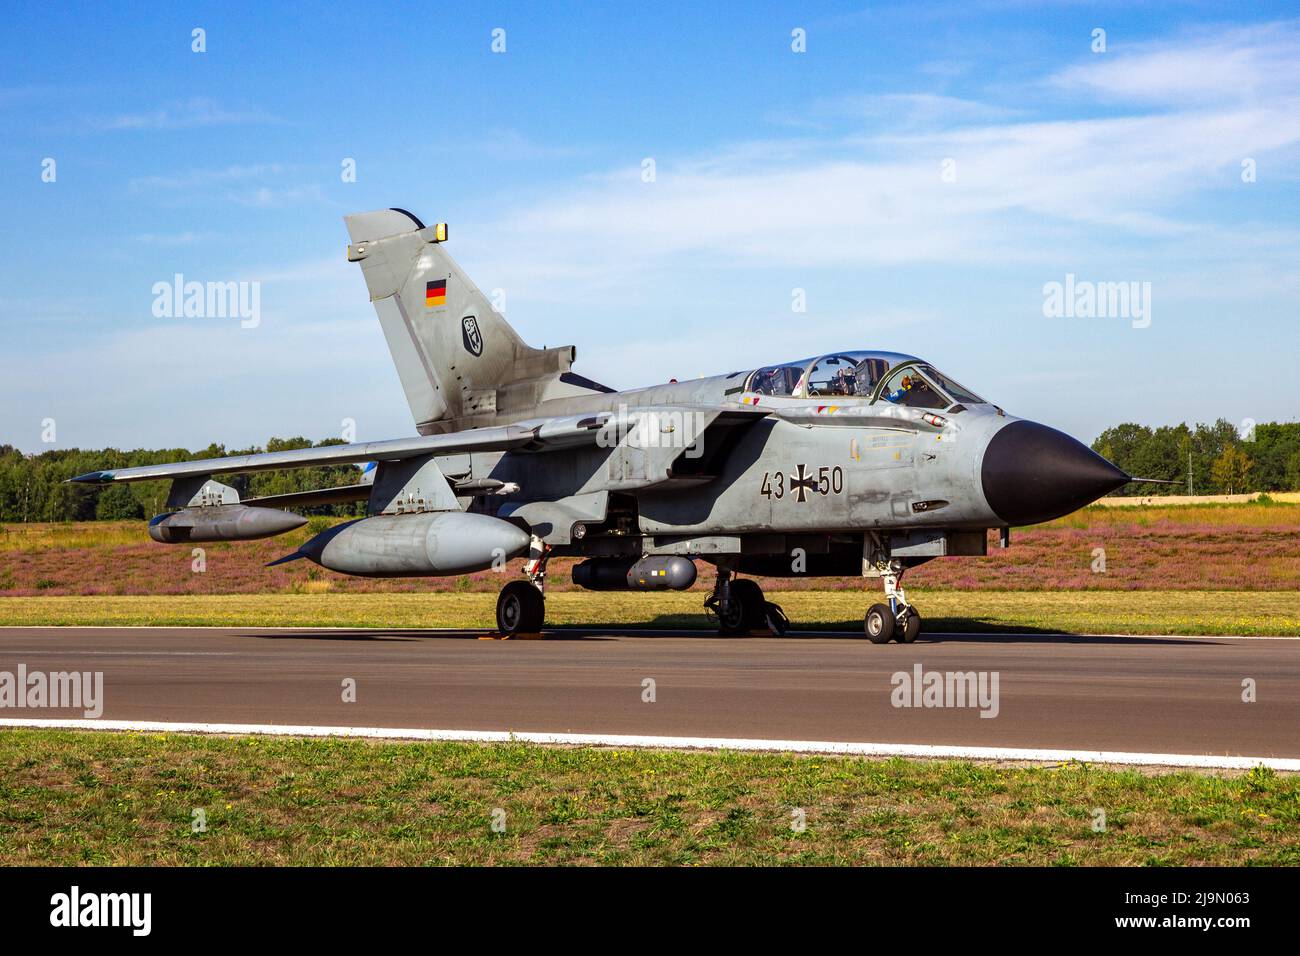 Panavia Tornado bomber jet from the German Air Force at Kleine-Brogel airbase. Belgium - September 14, 2019 Stock Photo